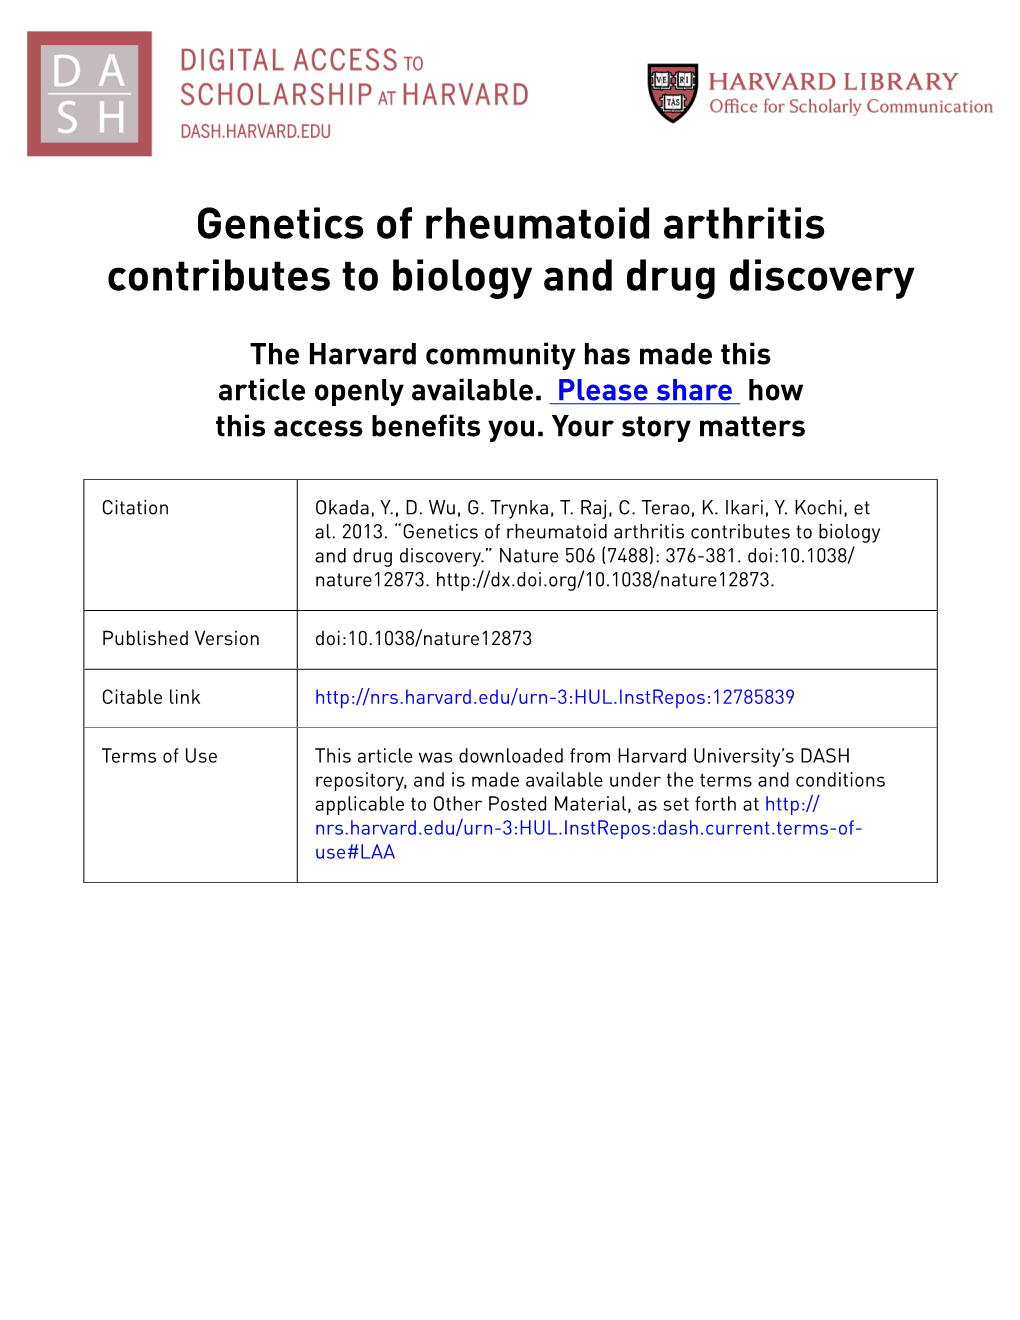 Genetics of Rheumatoid Arthritis Contributes to Biology and Drug Discovery